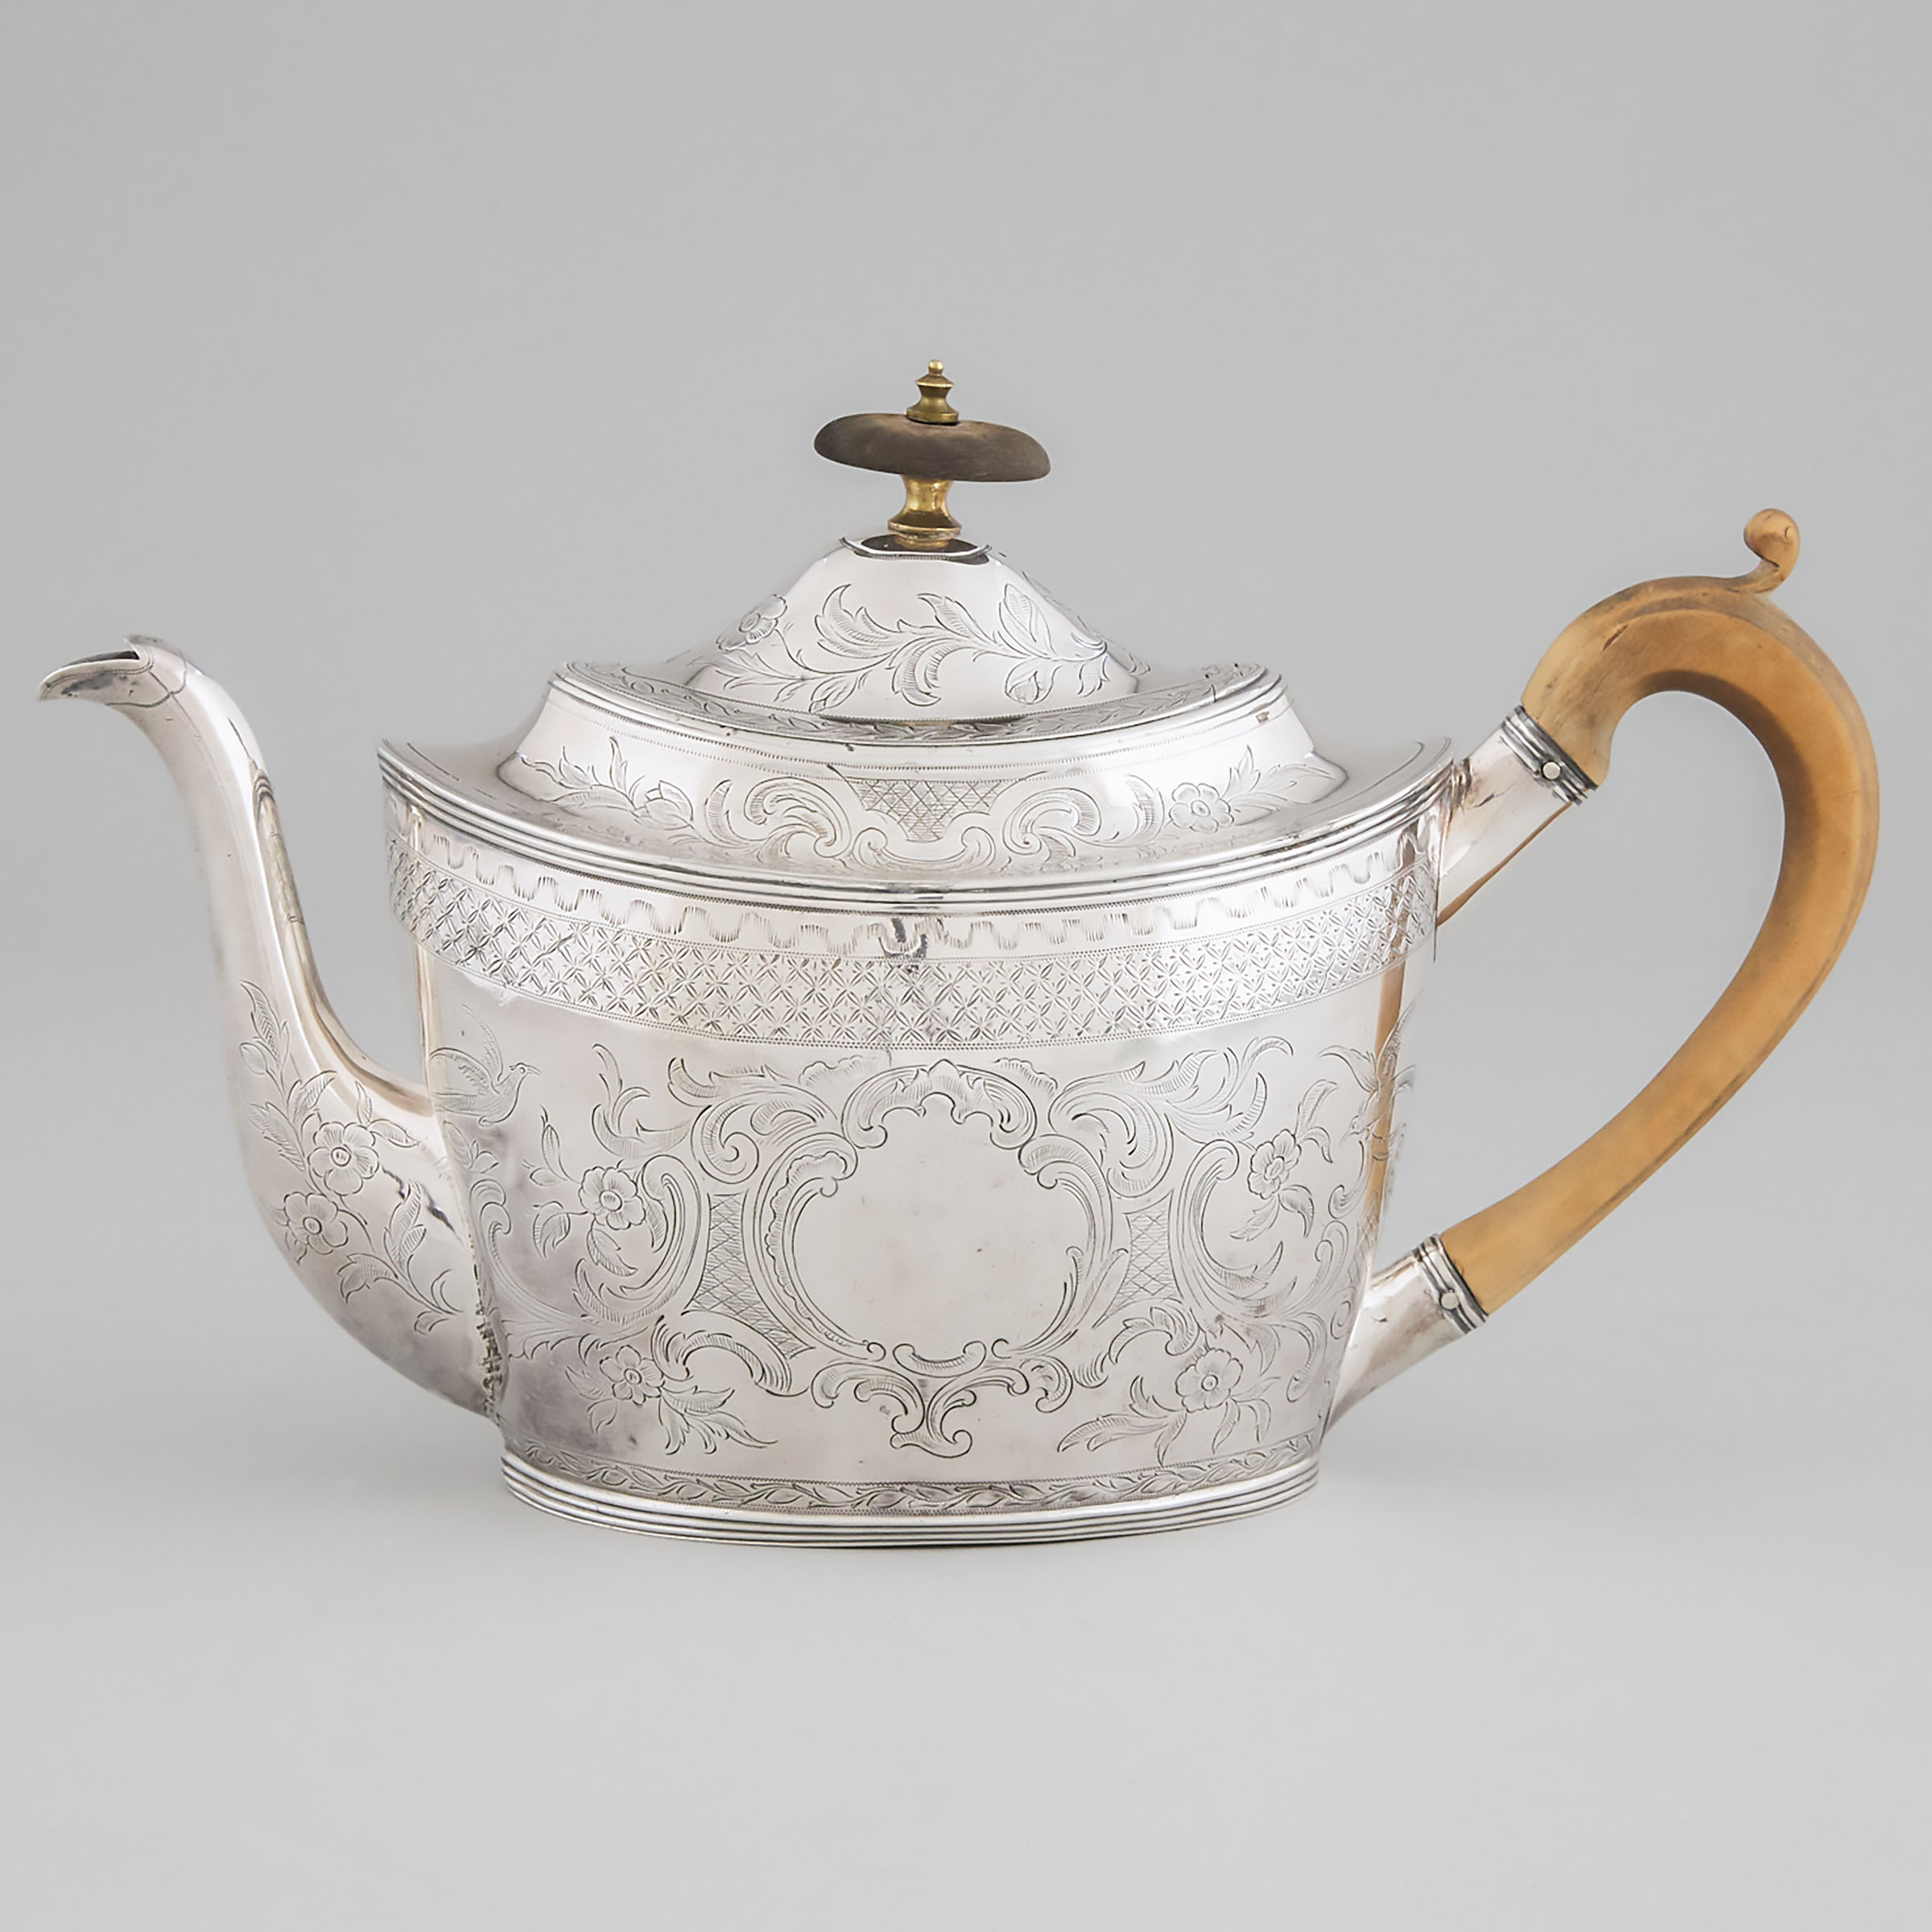 George III Silver Oval Teapot, Peter, Ann & William Bateman, London, 1800